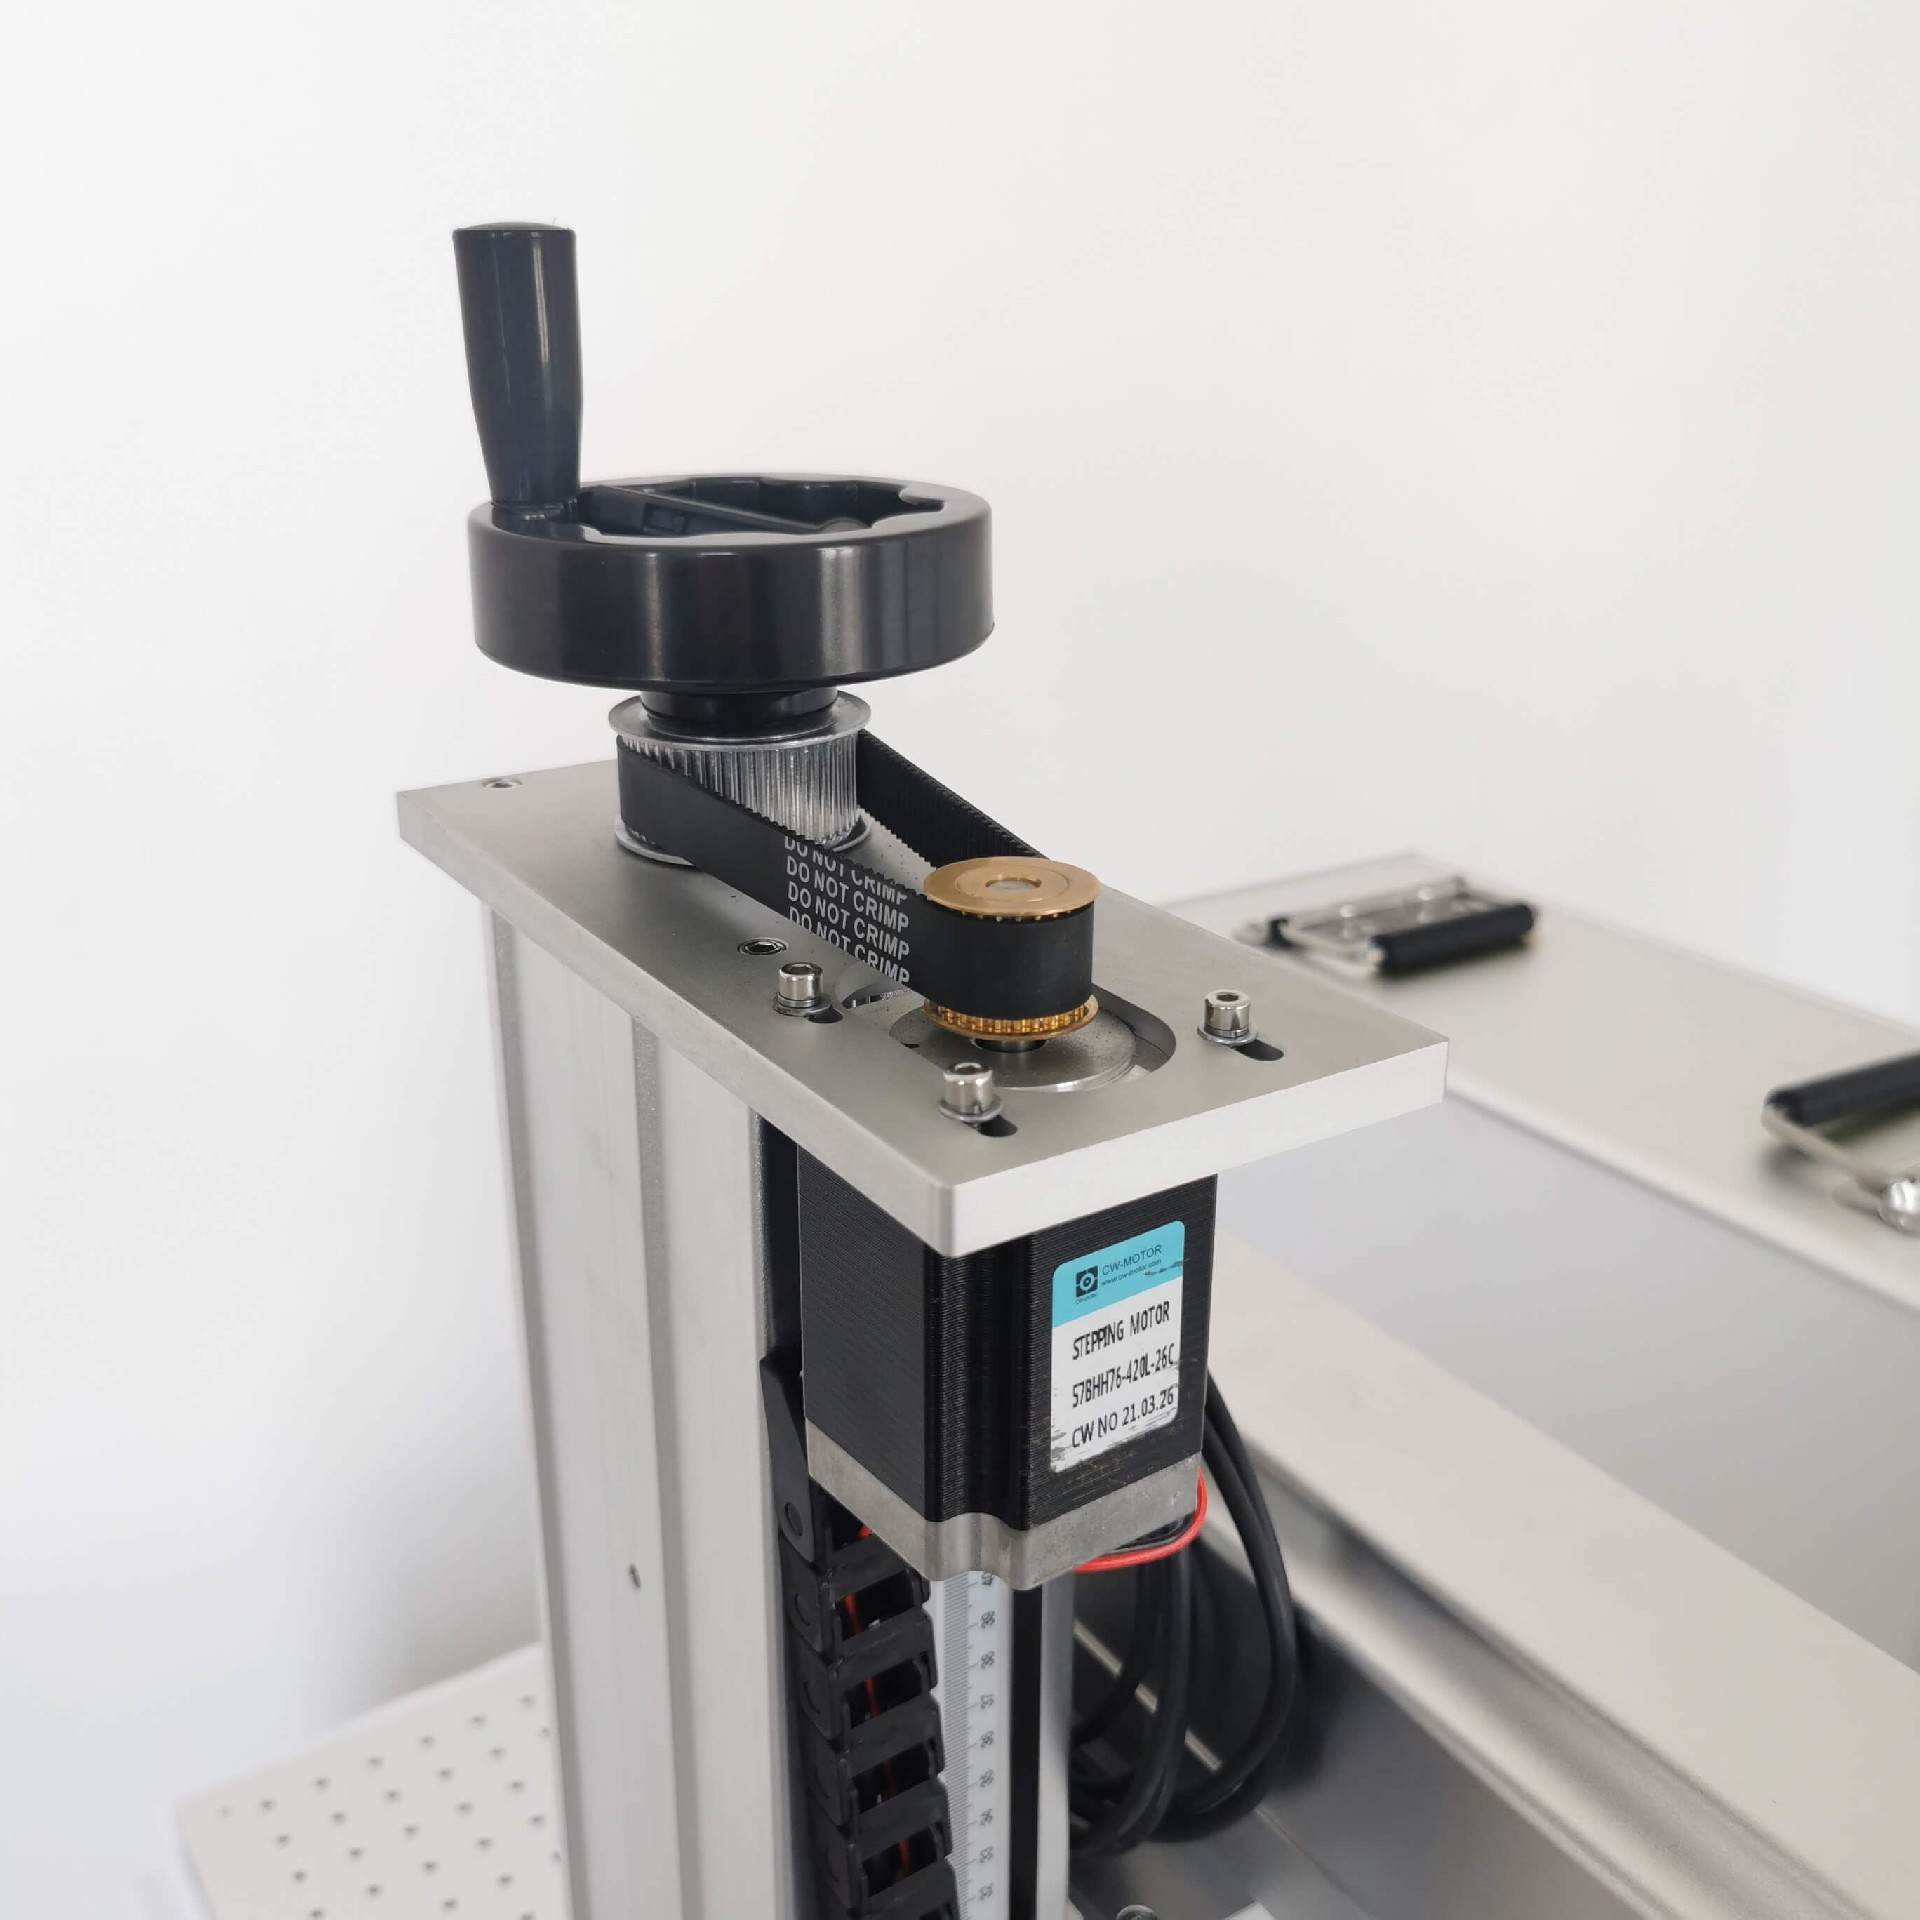 Haotian fiber laser machine with cyclop camera scanning head